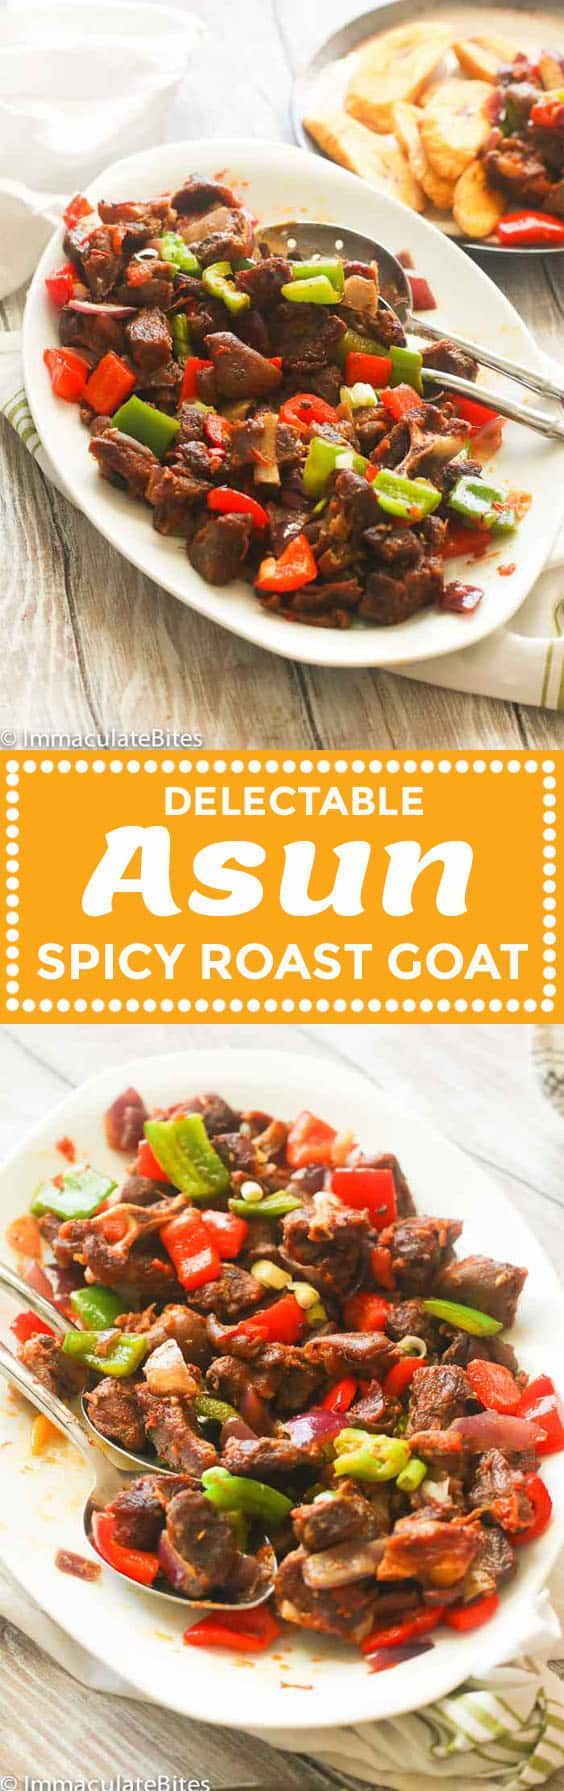 Asun Spicy Roast Goat